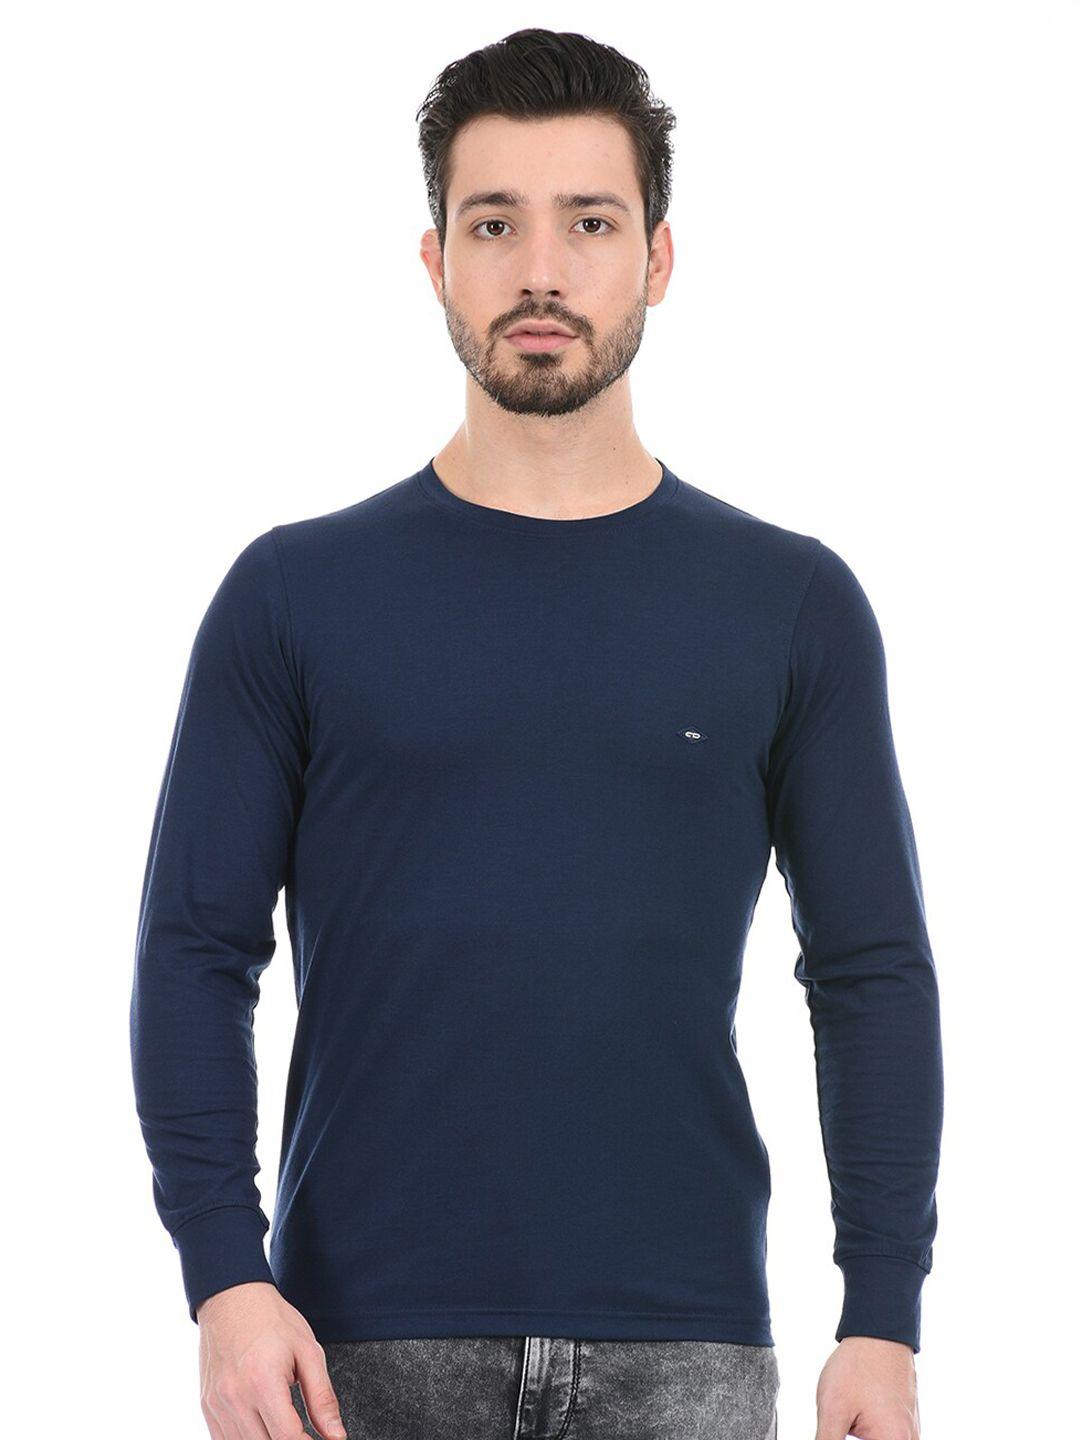 cloak & decker by monte carlo men navy blue t-shirt